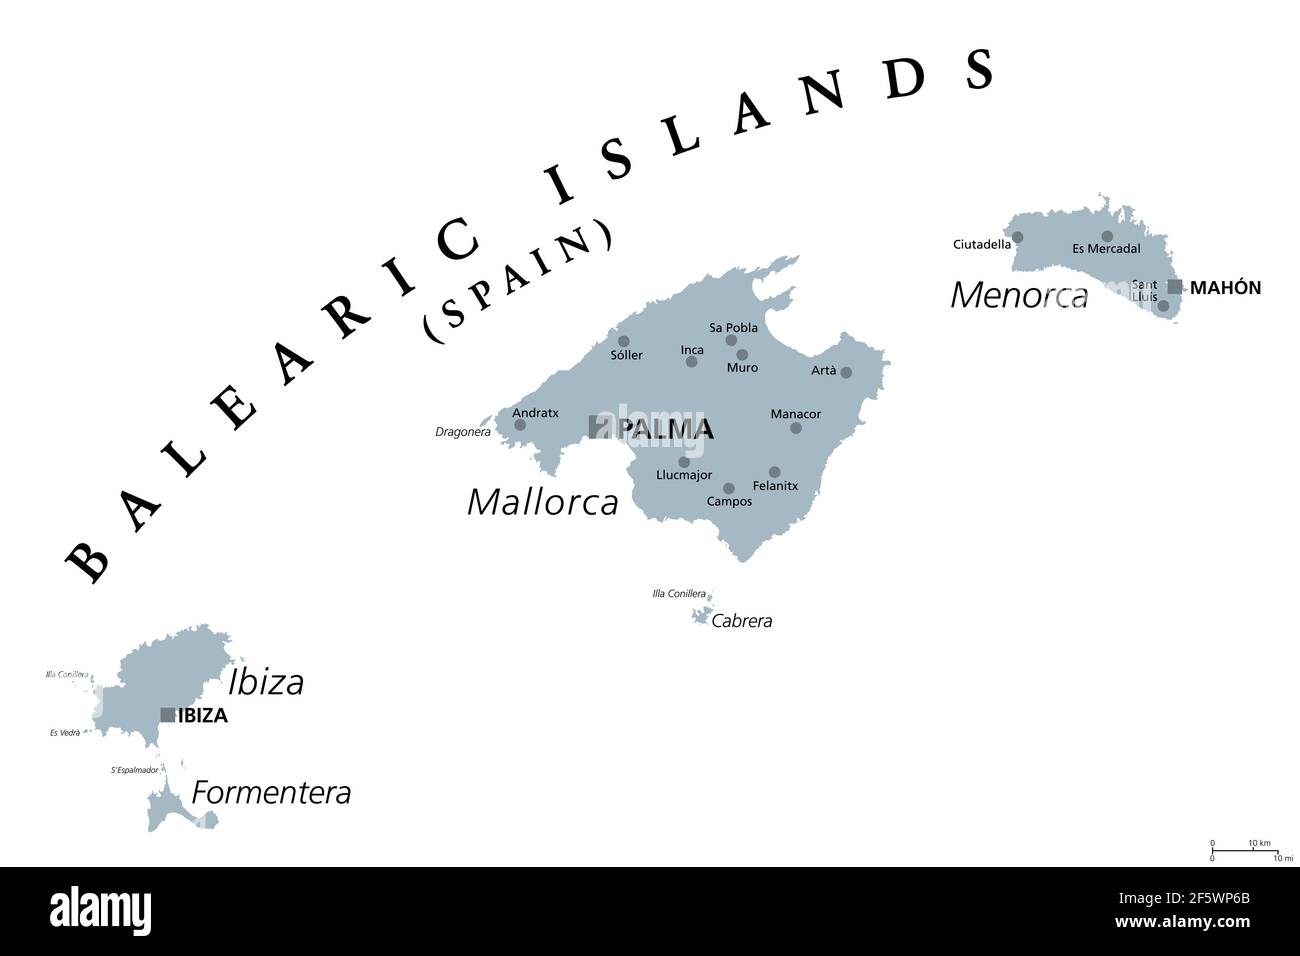 Balearic Islands, gray political map, with main islands Mallorca, Ibiza, Menorca and Formentera. Archipelago of islands in Spain, Mediterranean Sea. Stock Photo